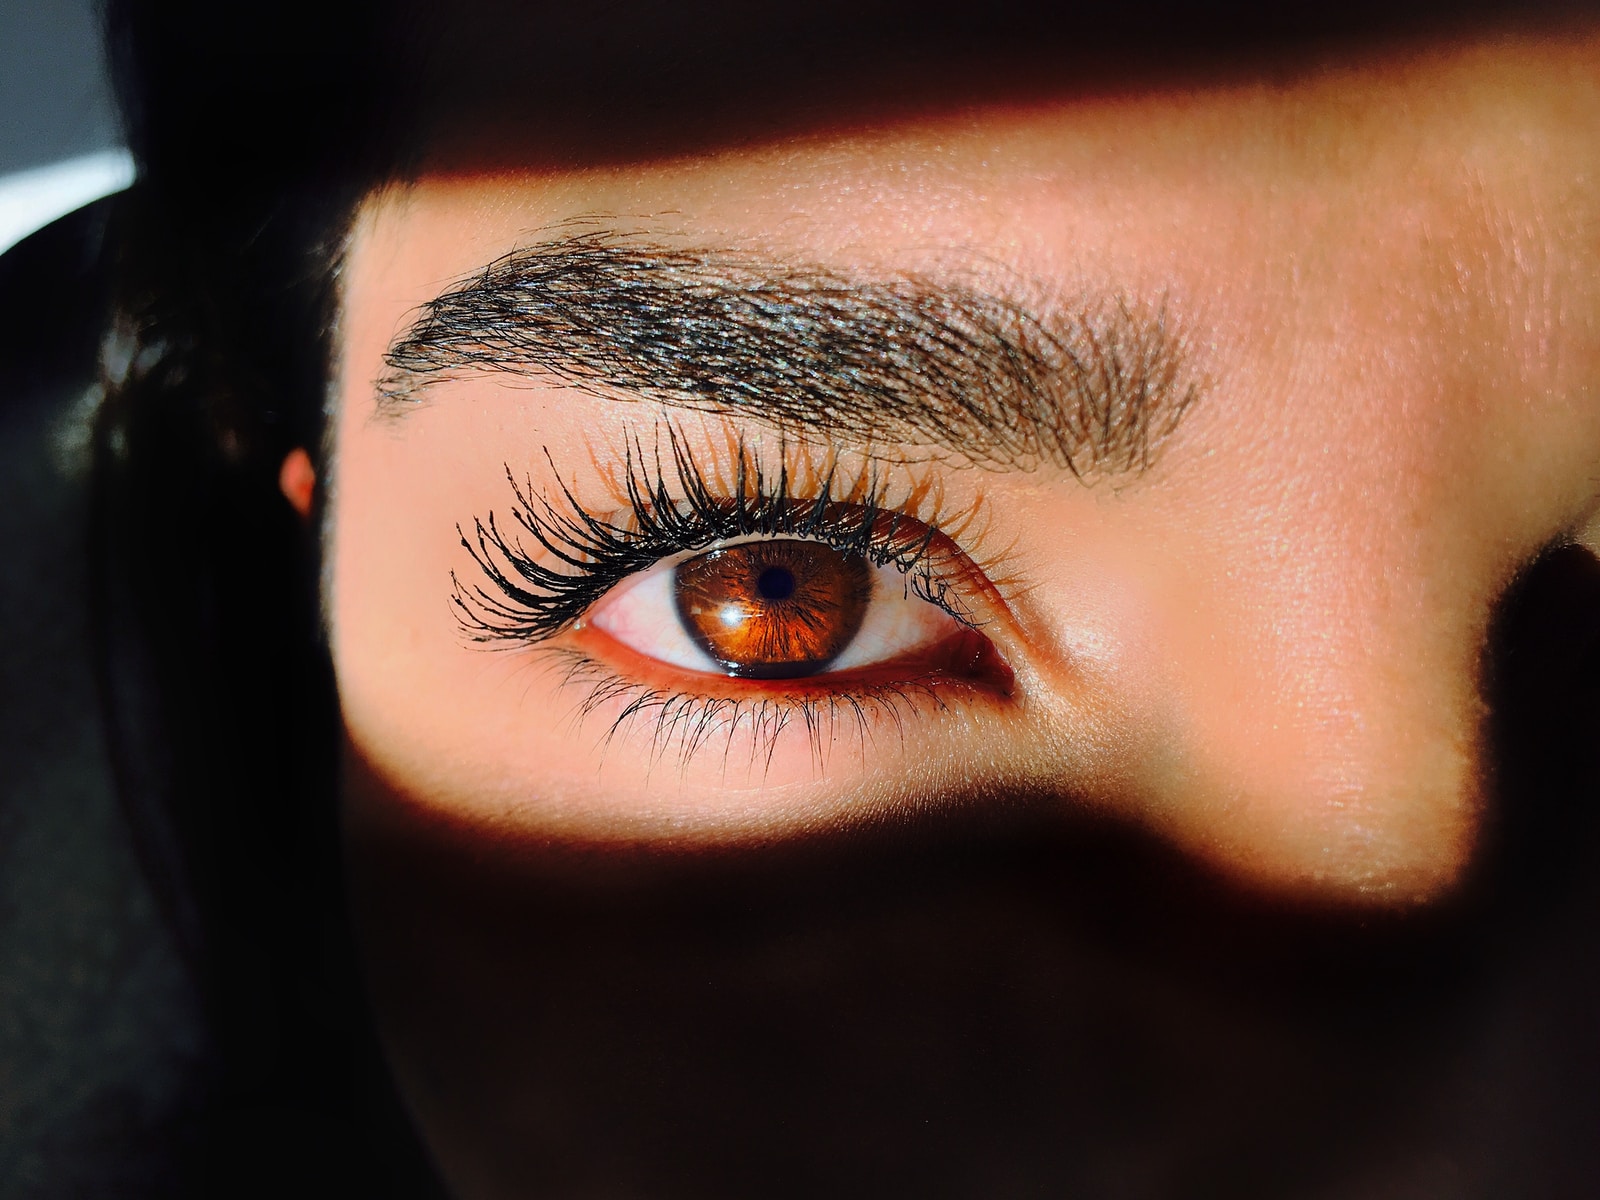 closeup photo of a woman's red eye